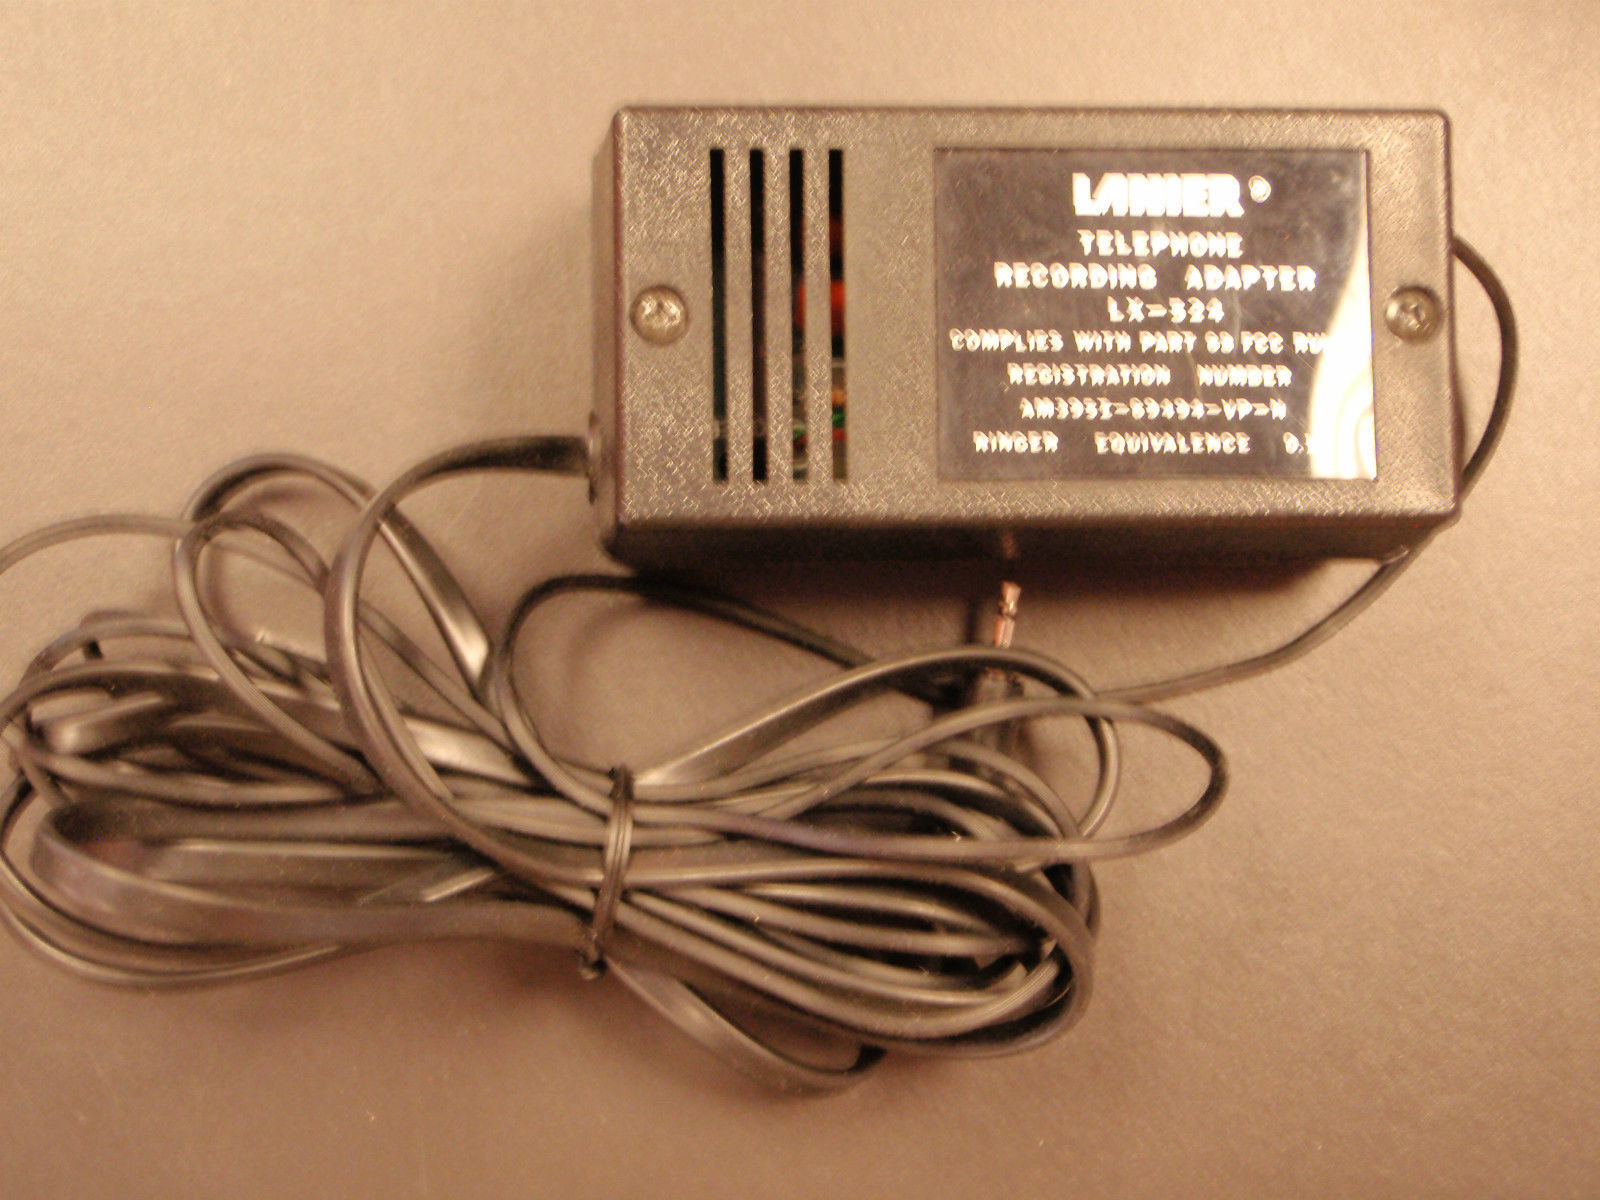 Lanier LX-524 telephone record adapter - $19.99